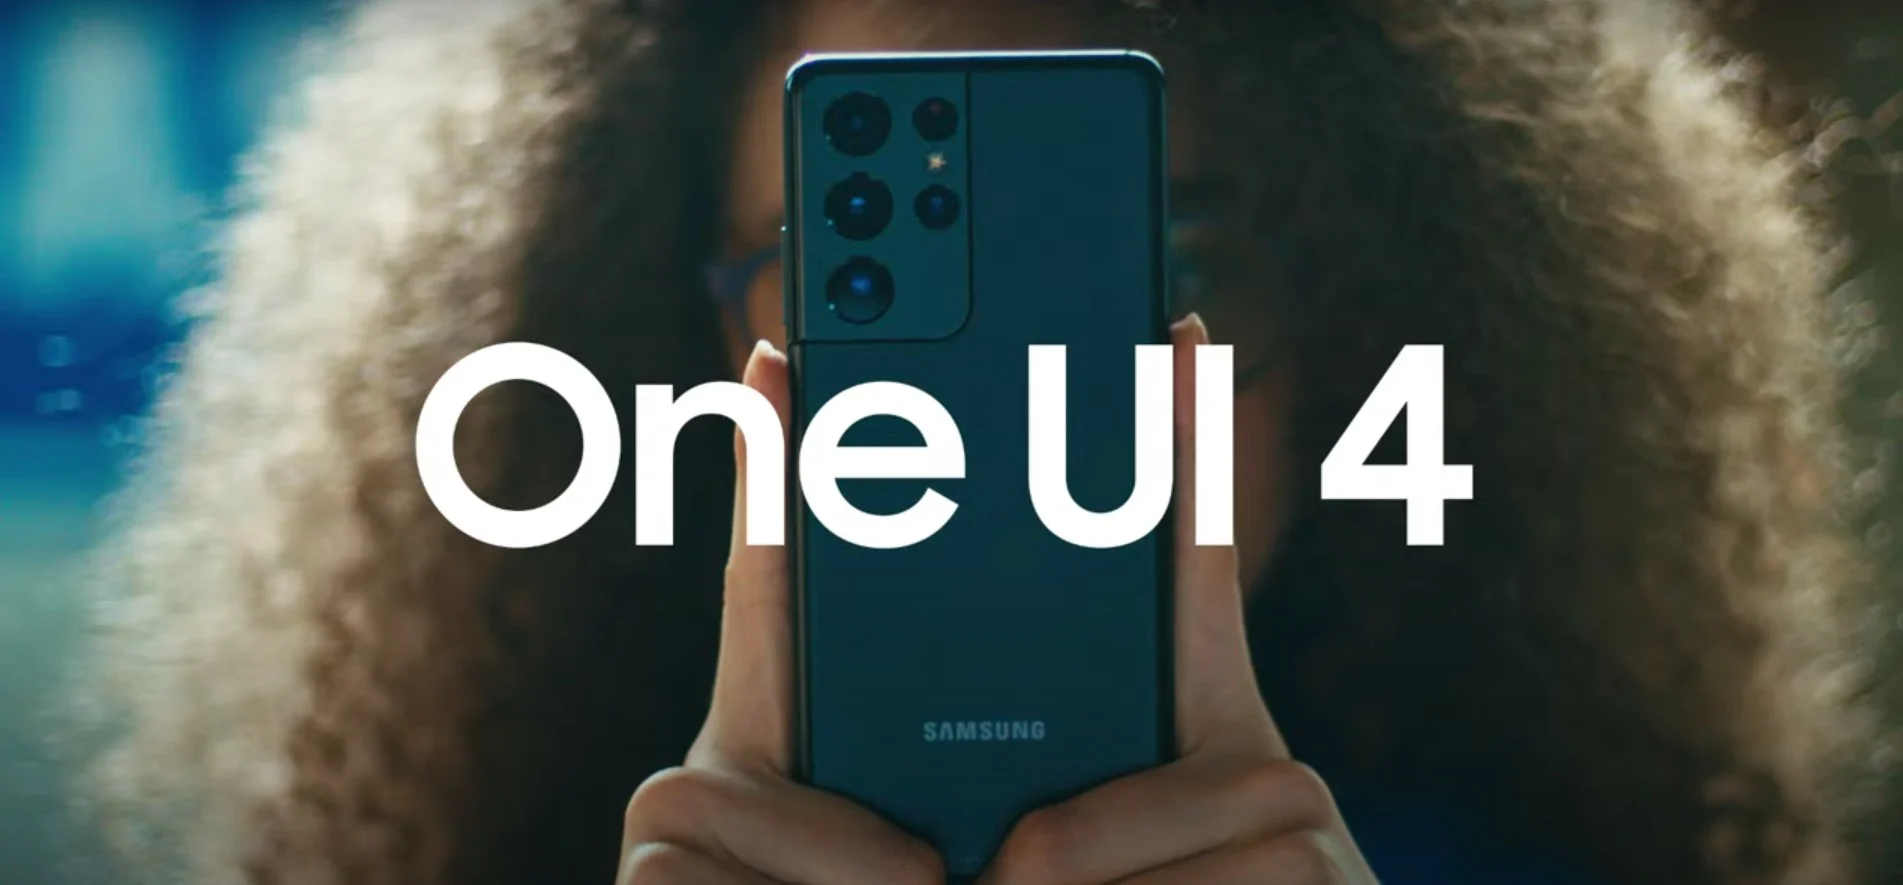 Dos teléfonos inteligentes Samsung económicos recibirán One UI 4.0 antes de lo previsto